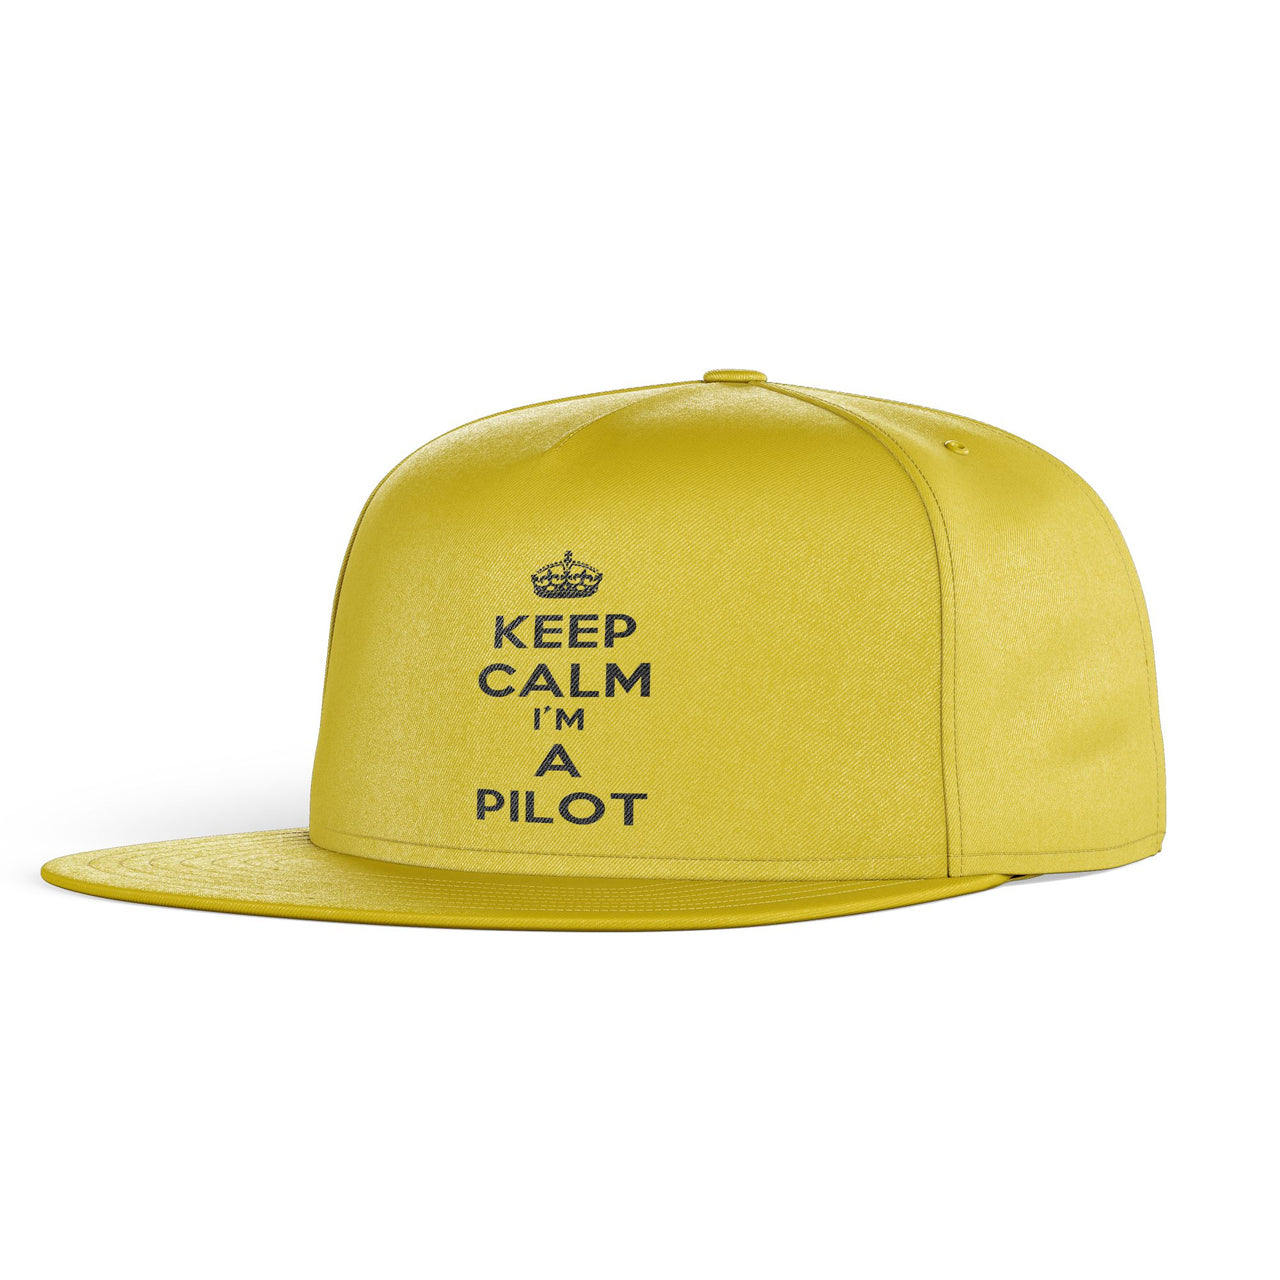 Keep Calm I'm a Pilot Designed Snapback Caps & Hats